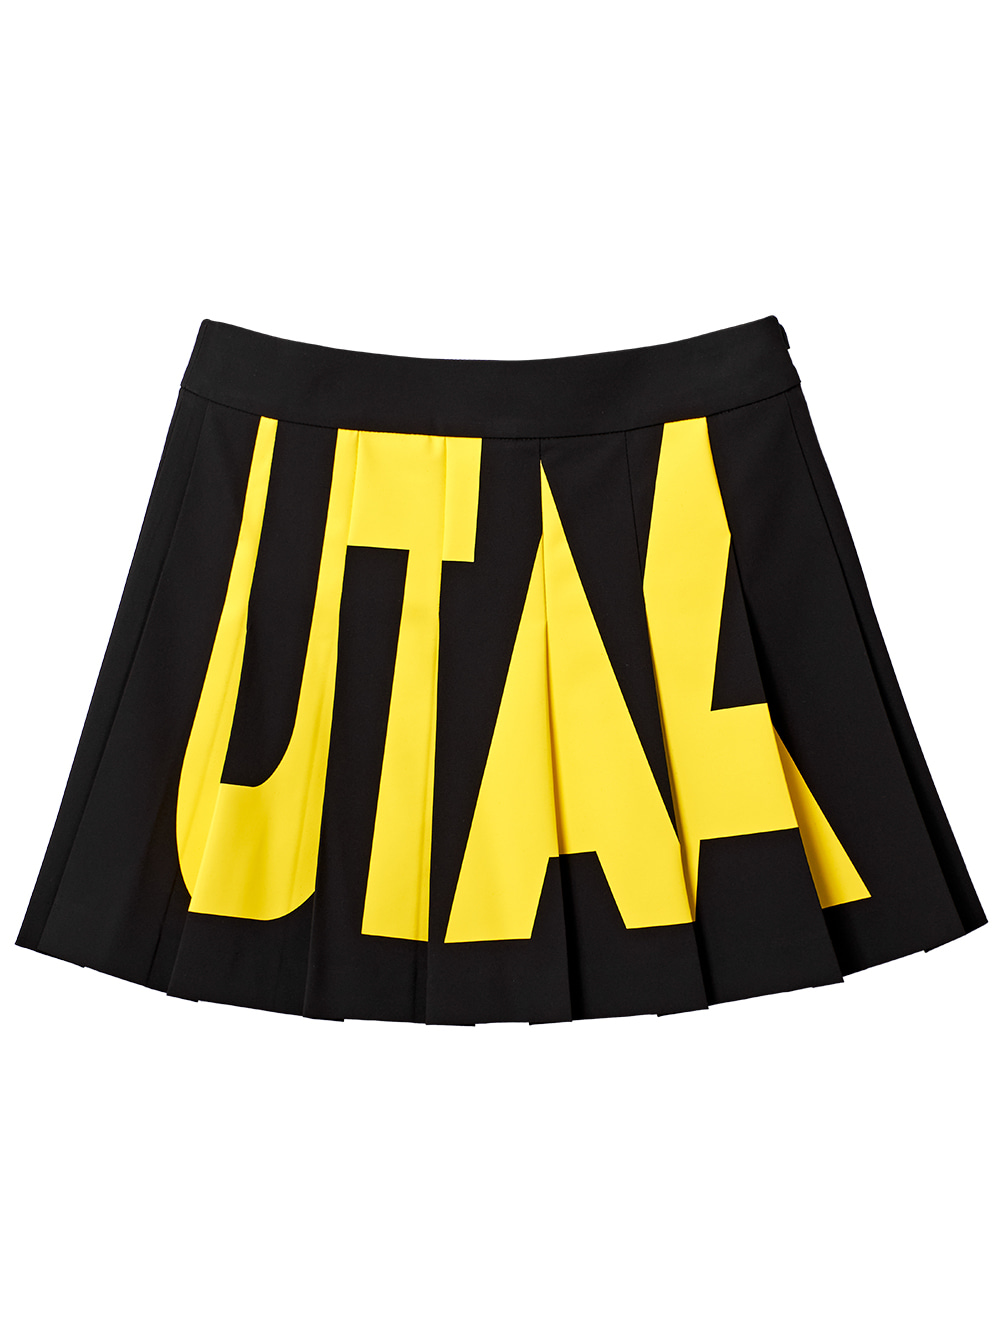 UTAA Bold Logo Flare Fan Skirt : Black (UC1SKF112BK)